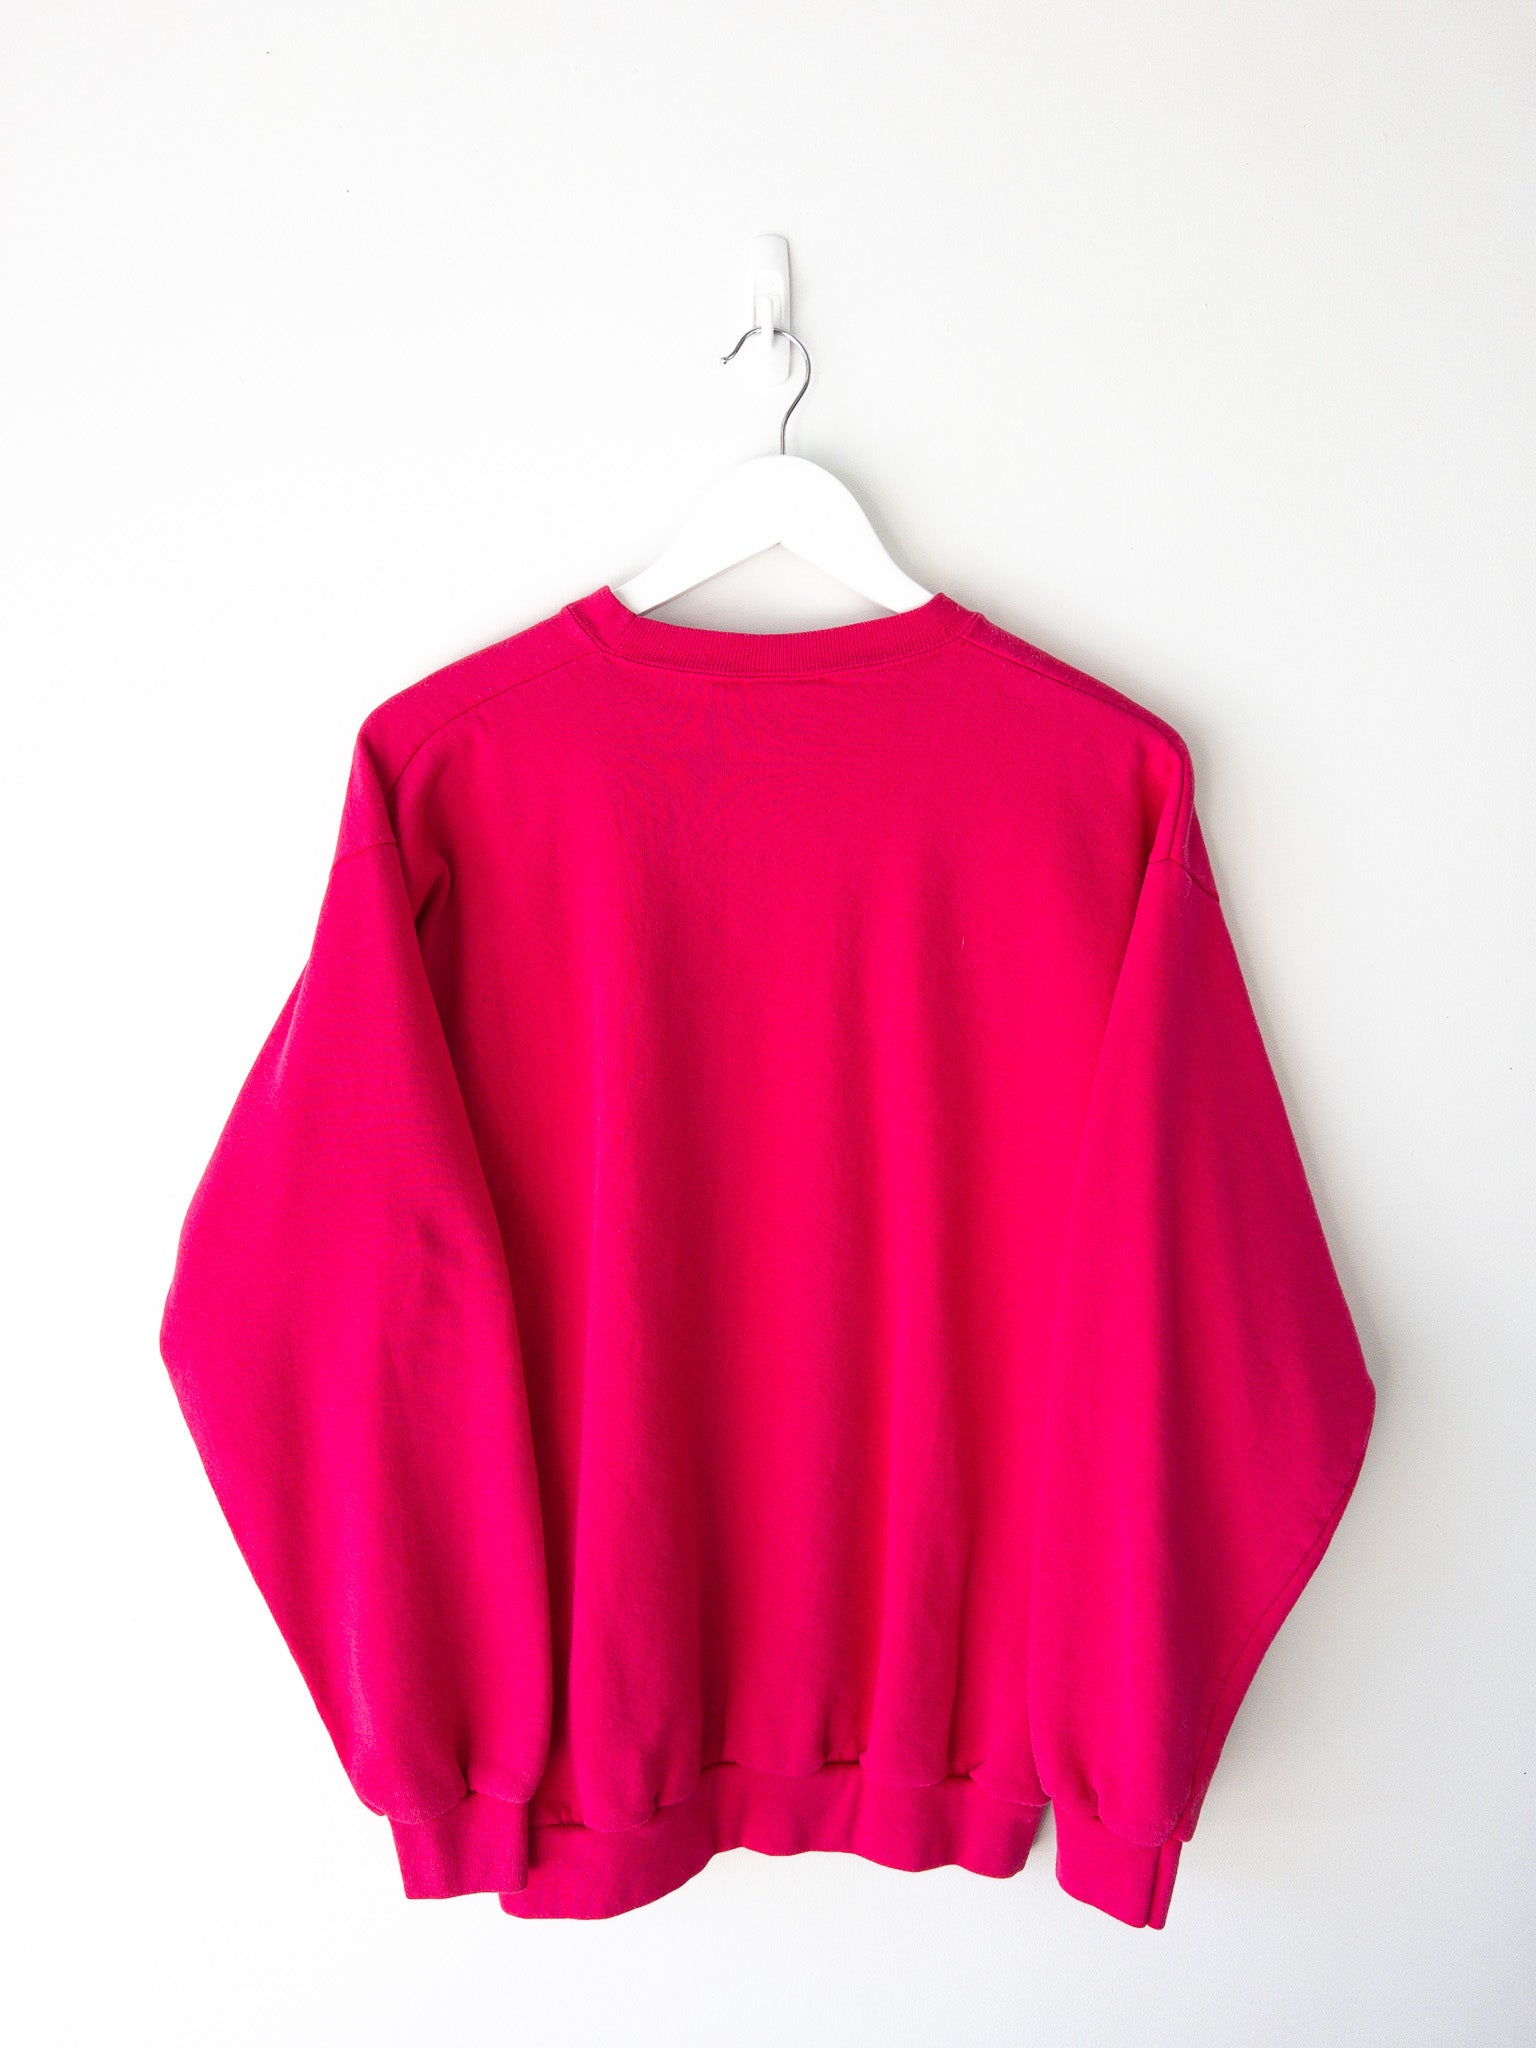 Vintage Minnie Sweatshirt (L)